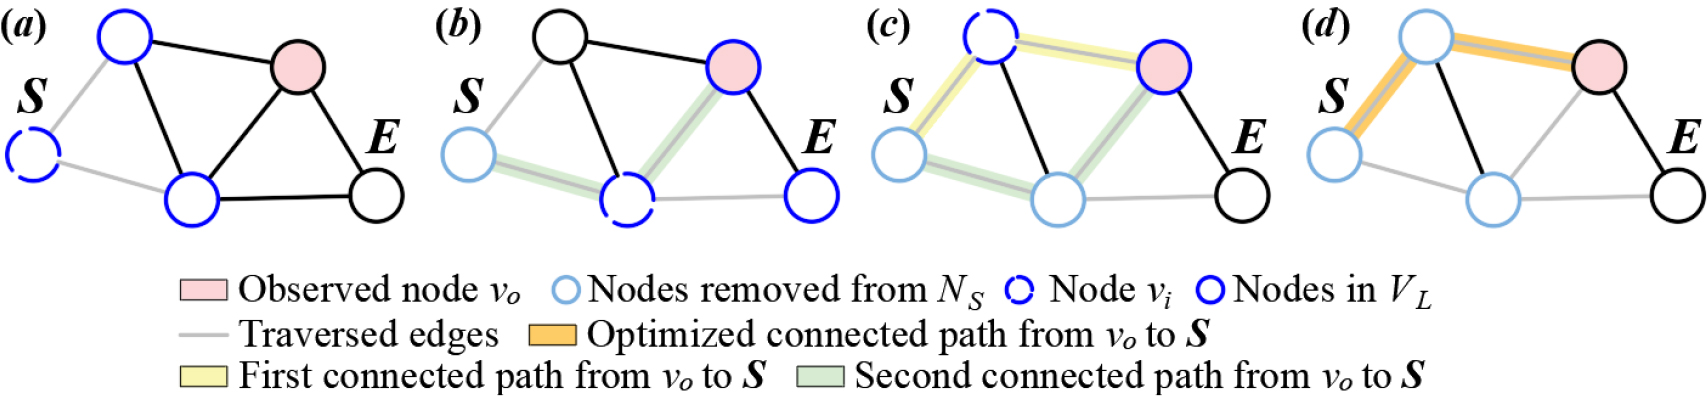 Path generation process of Dijkstra’s algorithm.